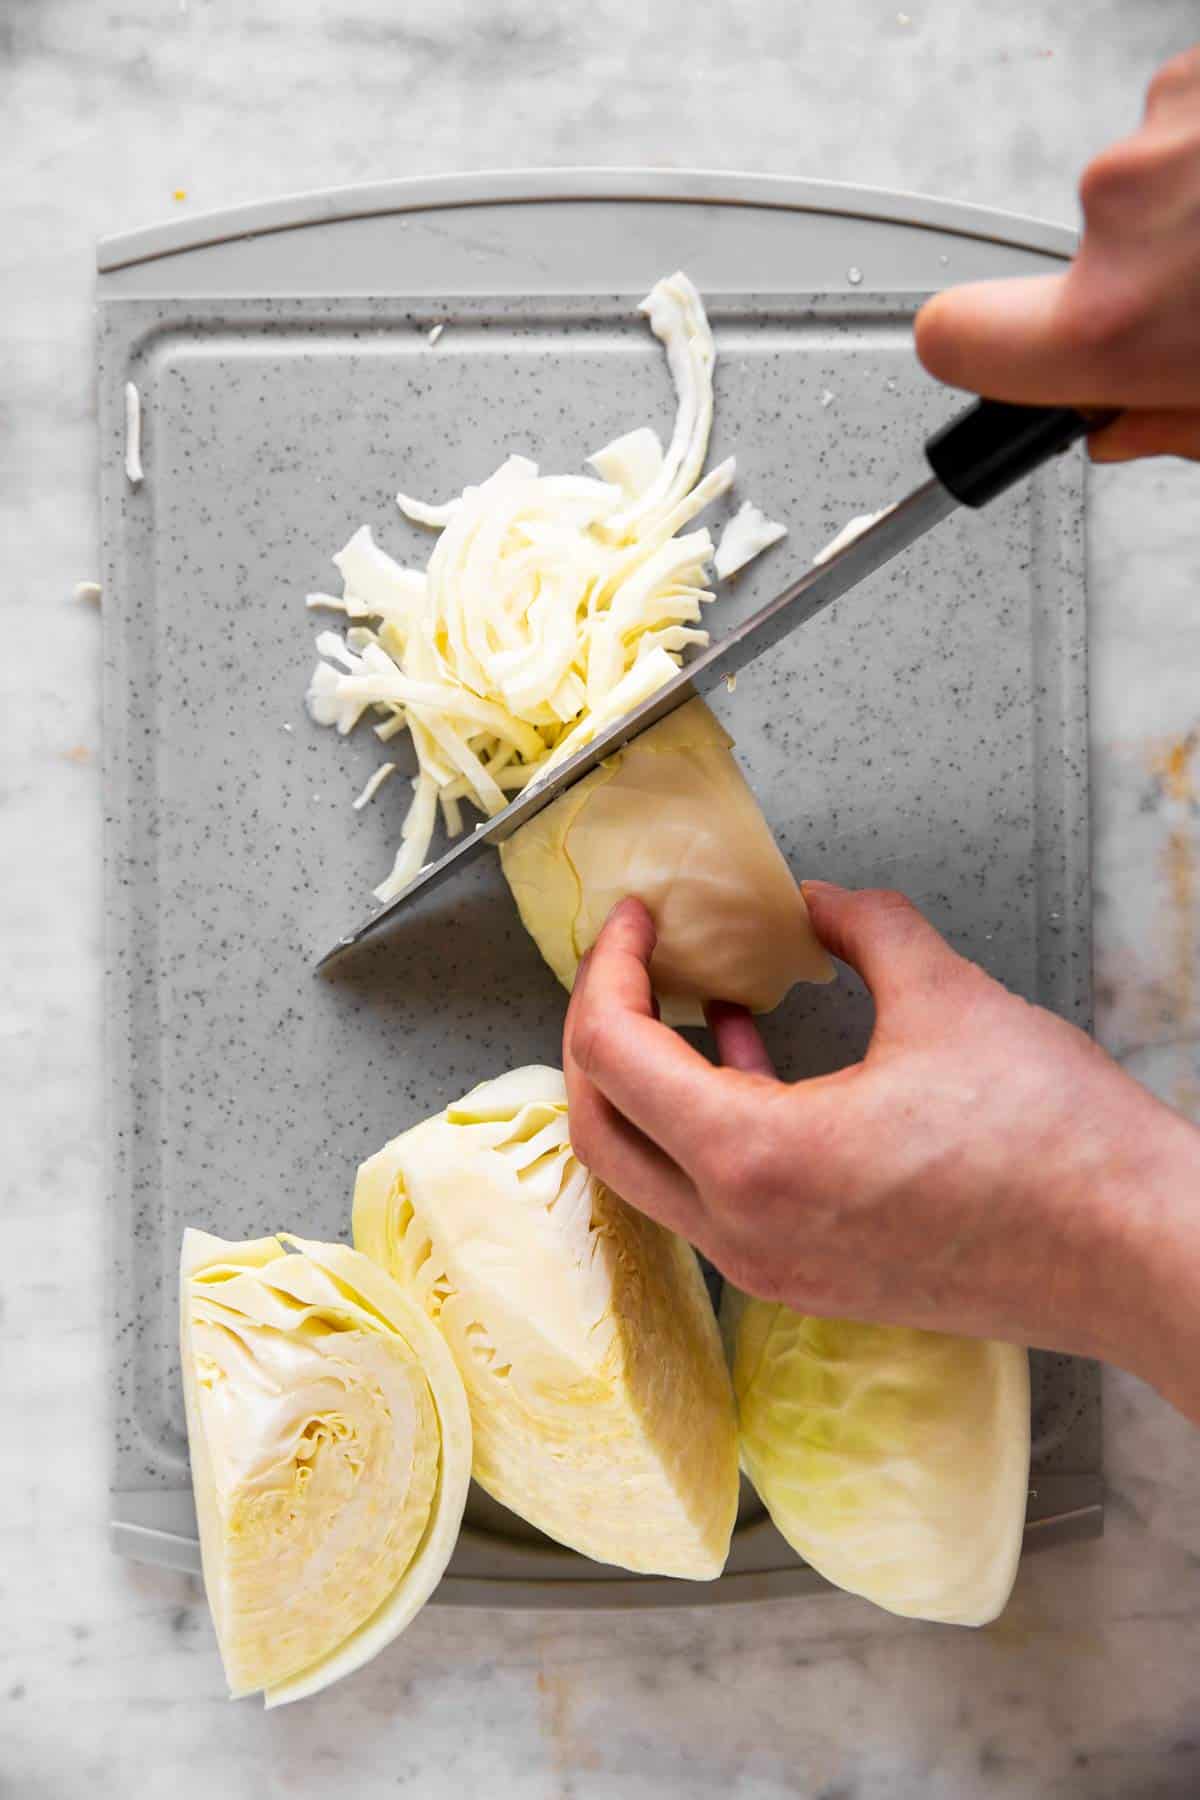 female hands shredding white cabbage into short shreds